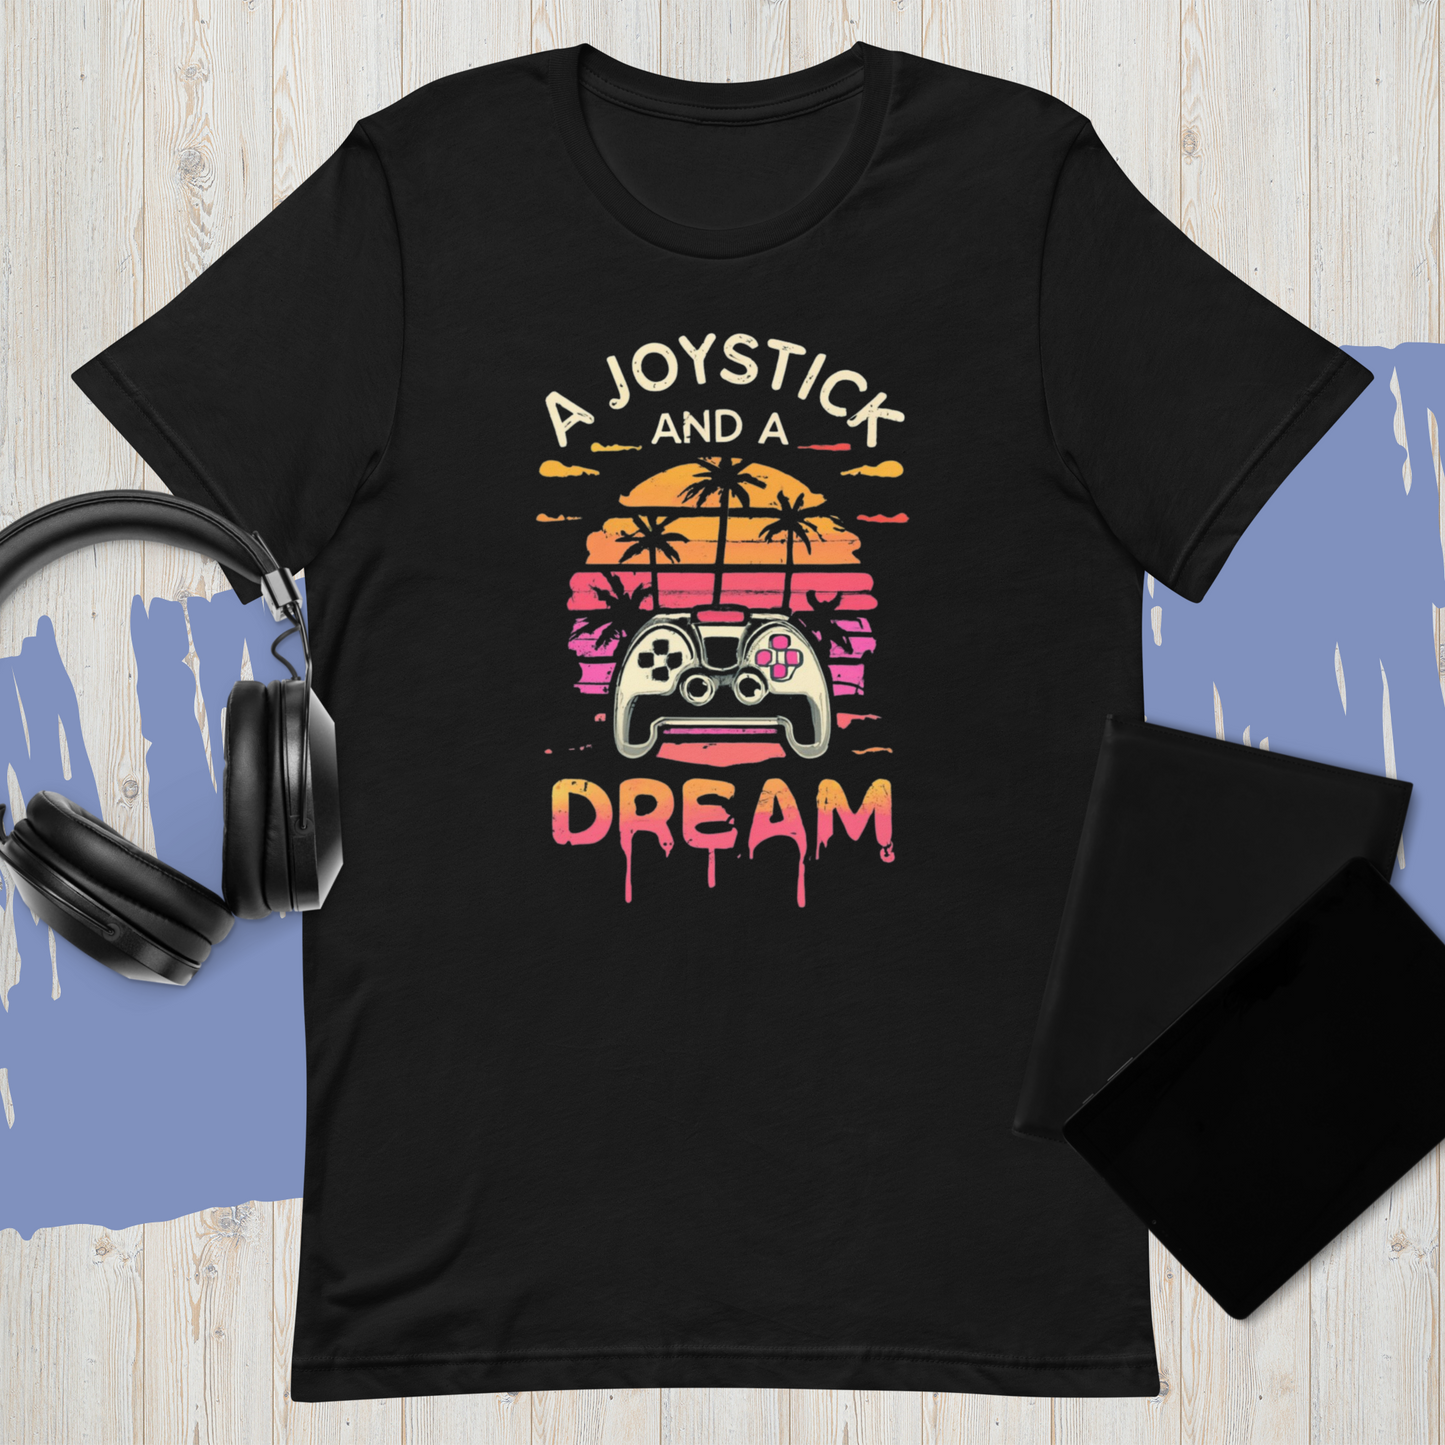 A Joystick and a Dream